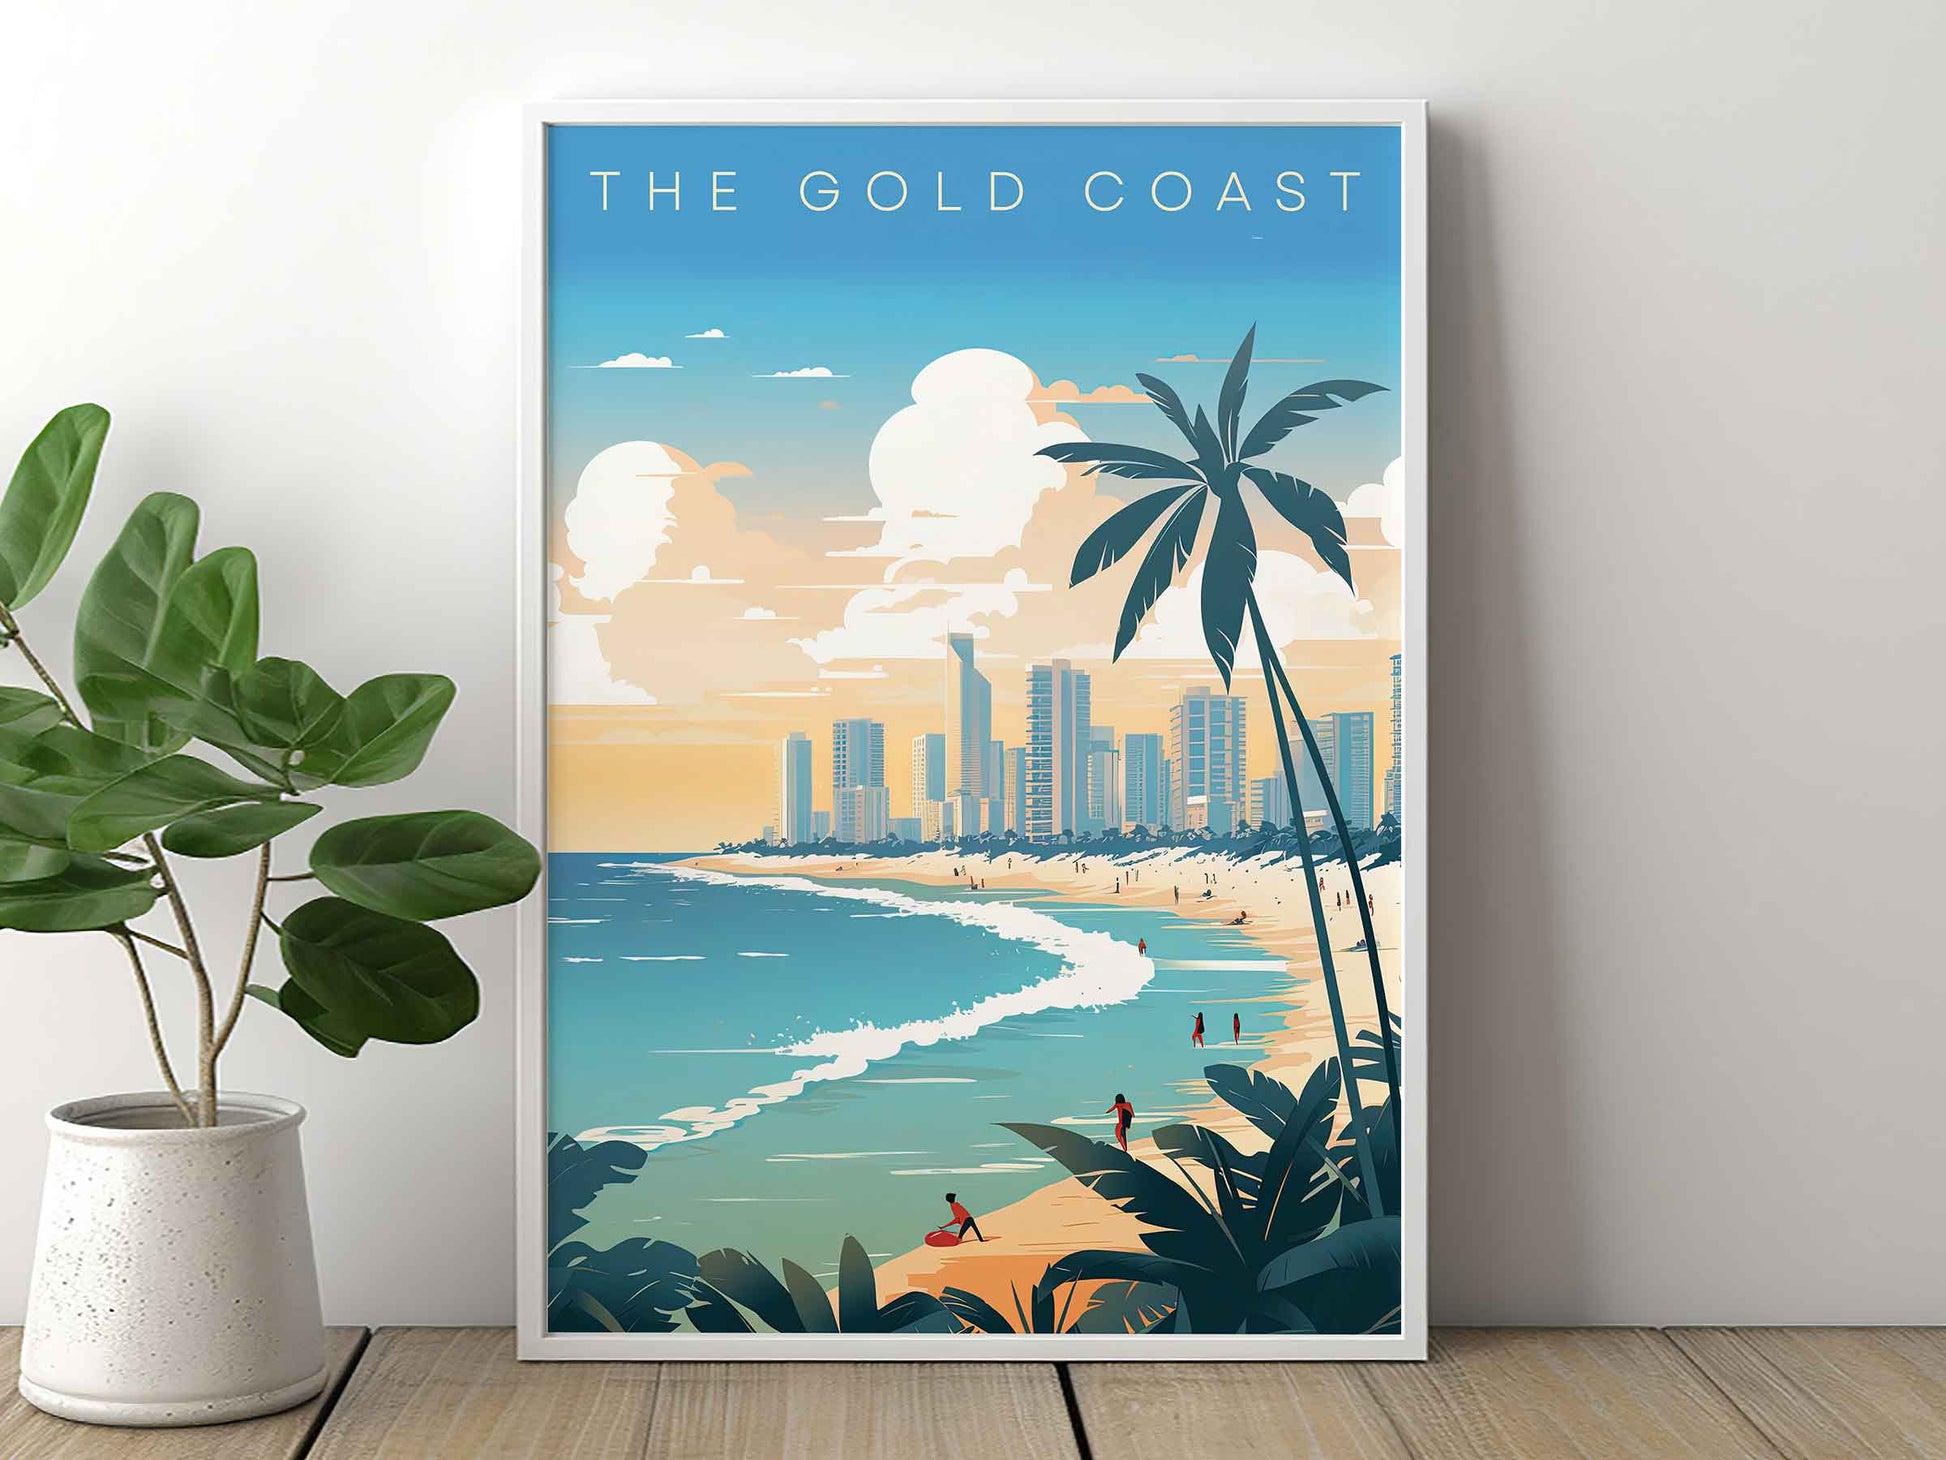 Framed Image of Gold Coast Australia Wall Art Travel Poster Prints Illustration